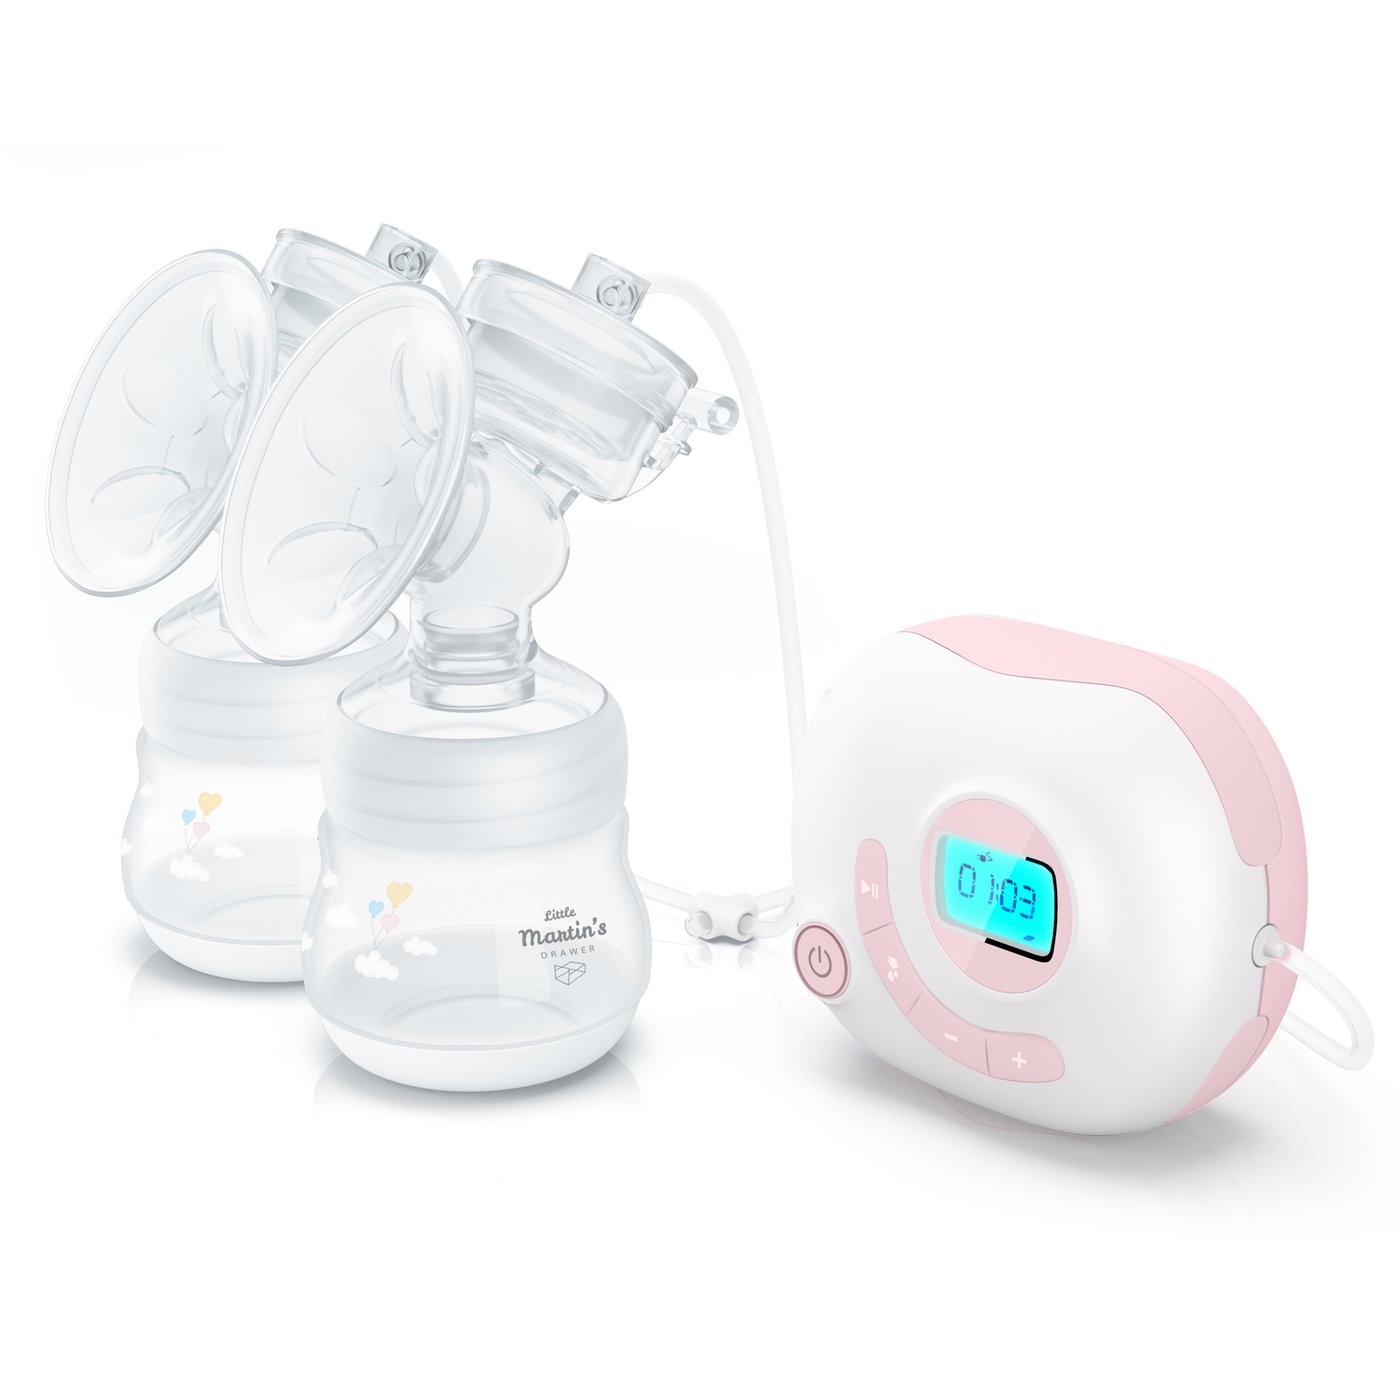 Electric breast milk pump cost